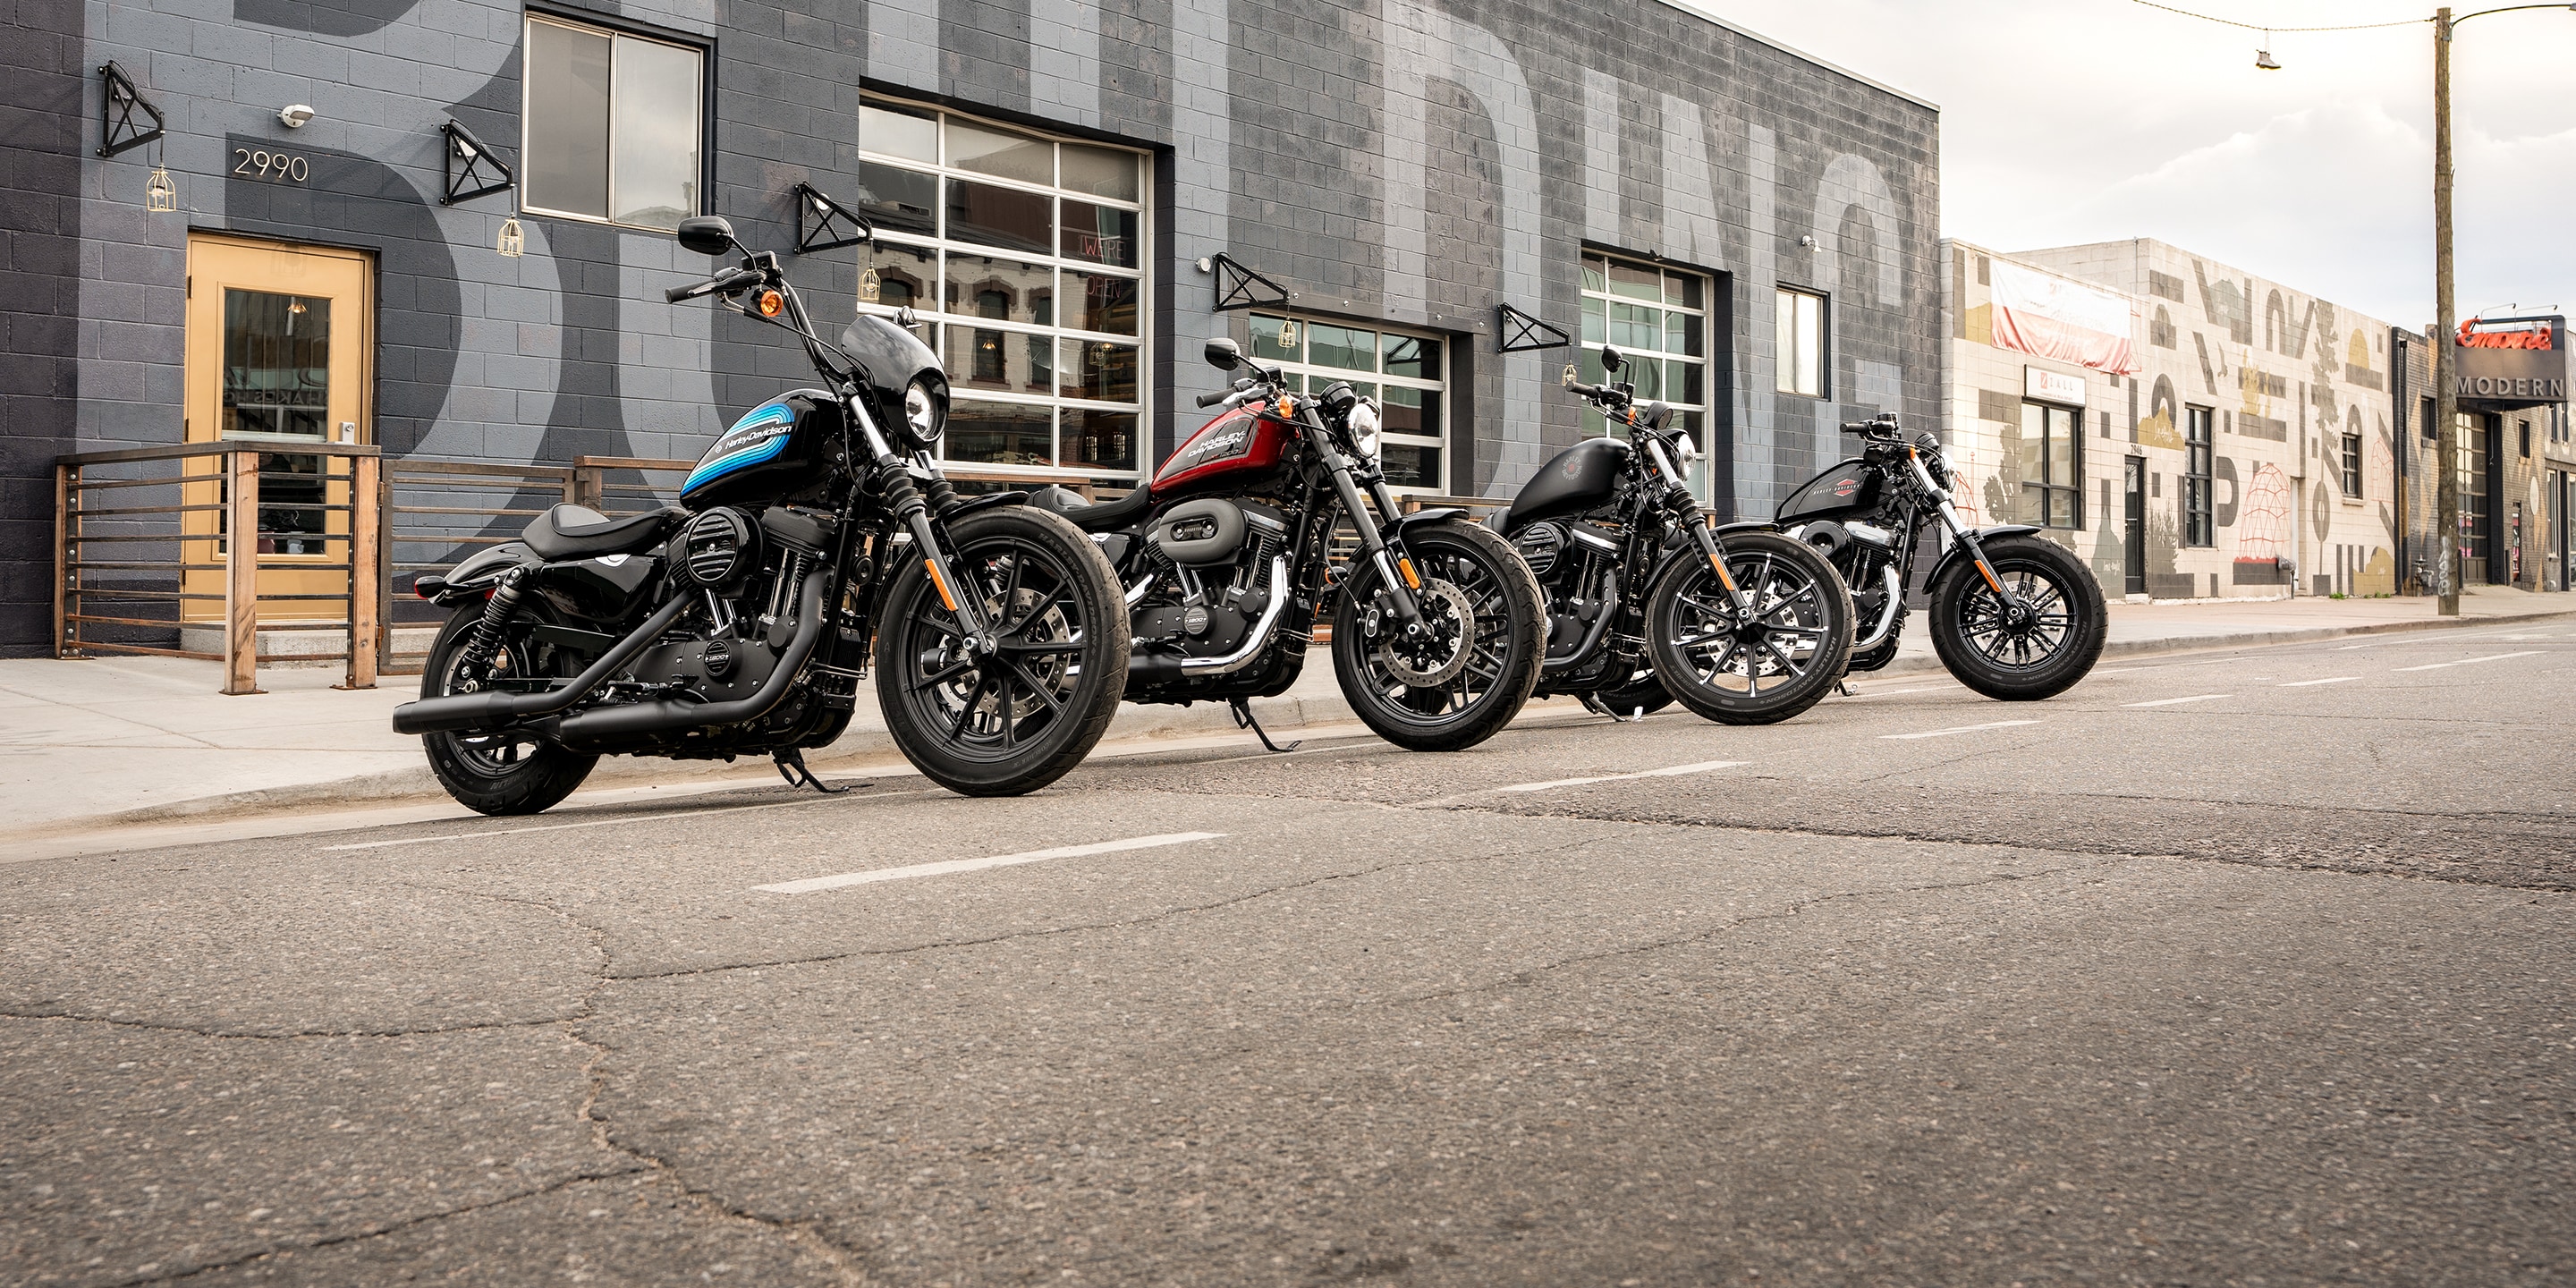 Sportster Motorcycles. Harley Davidson USA